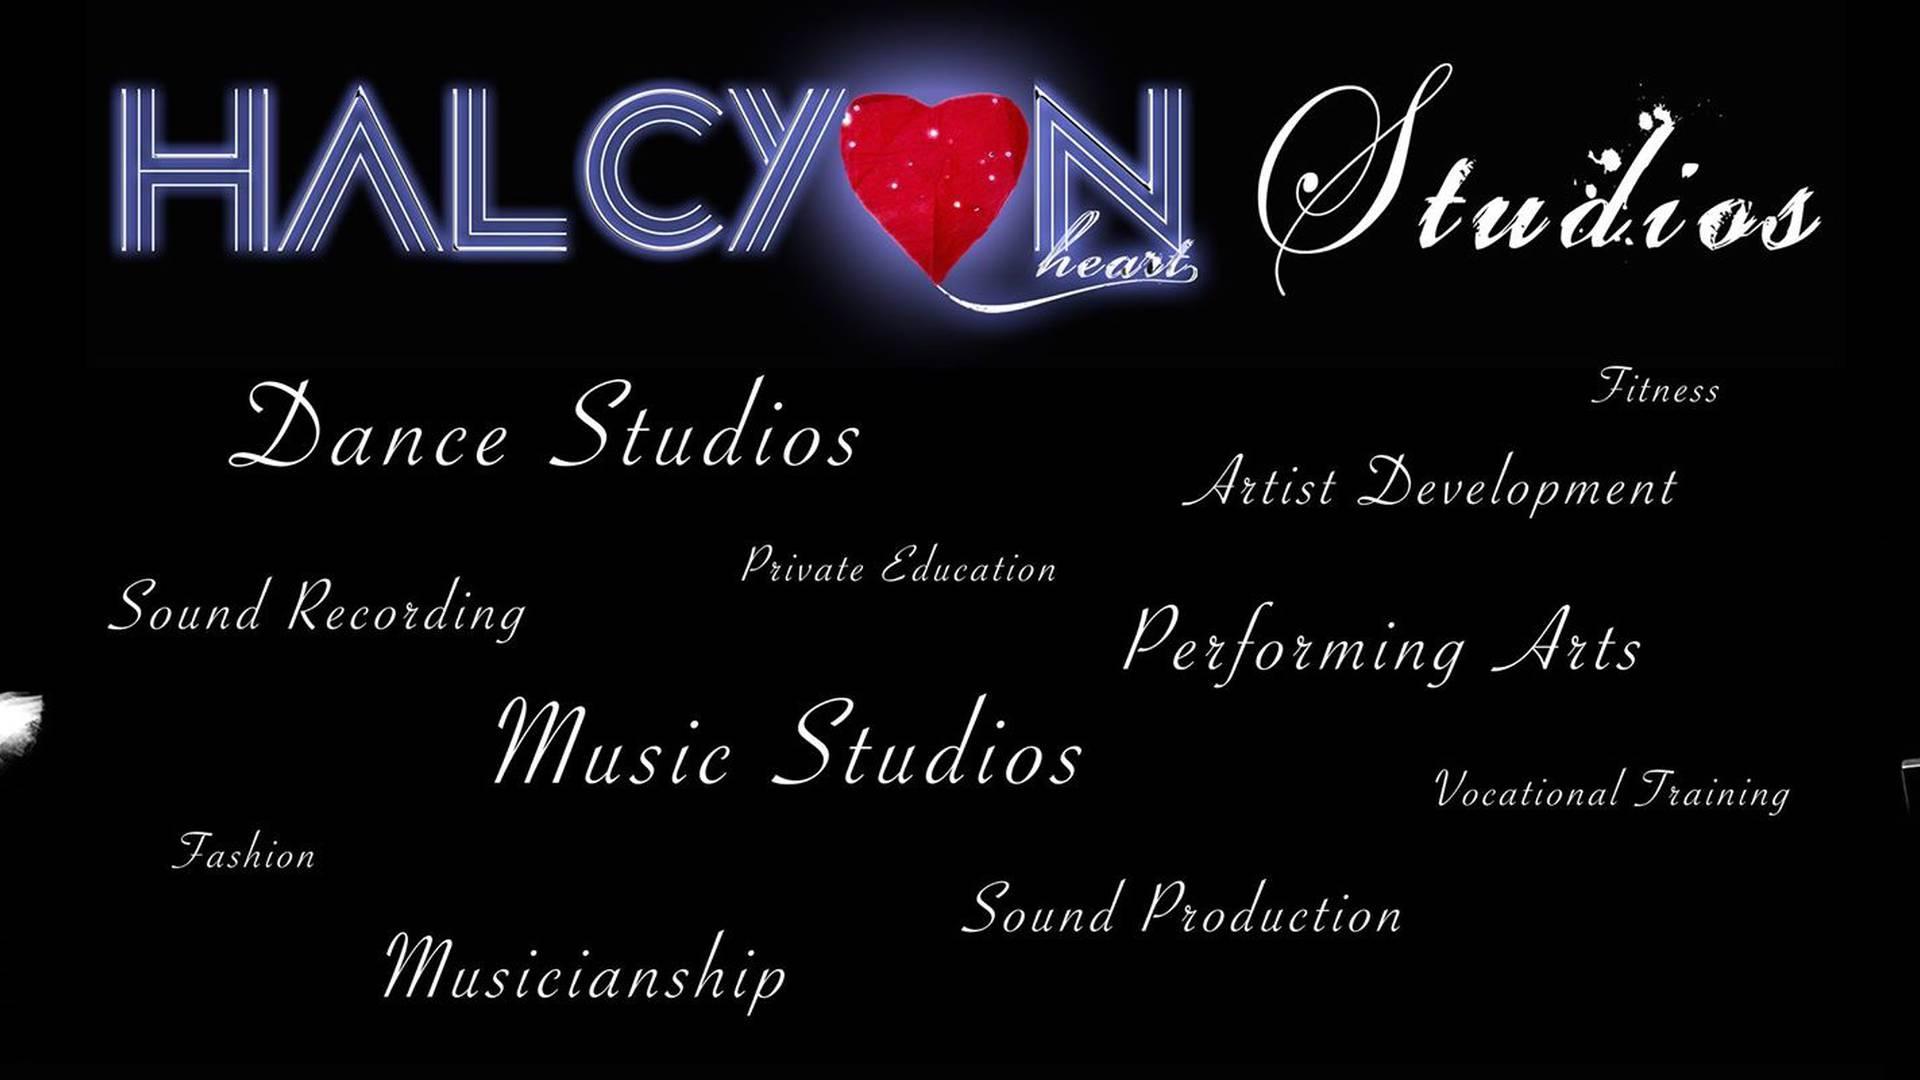 Halcyon Heart Music & Dance Studios photo